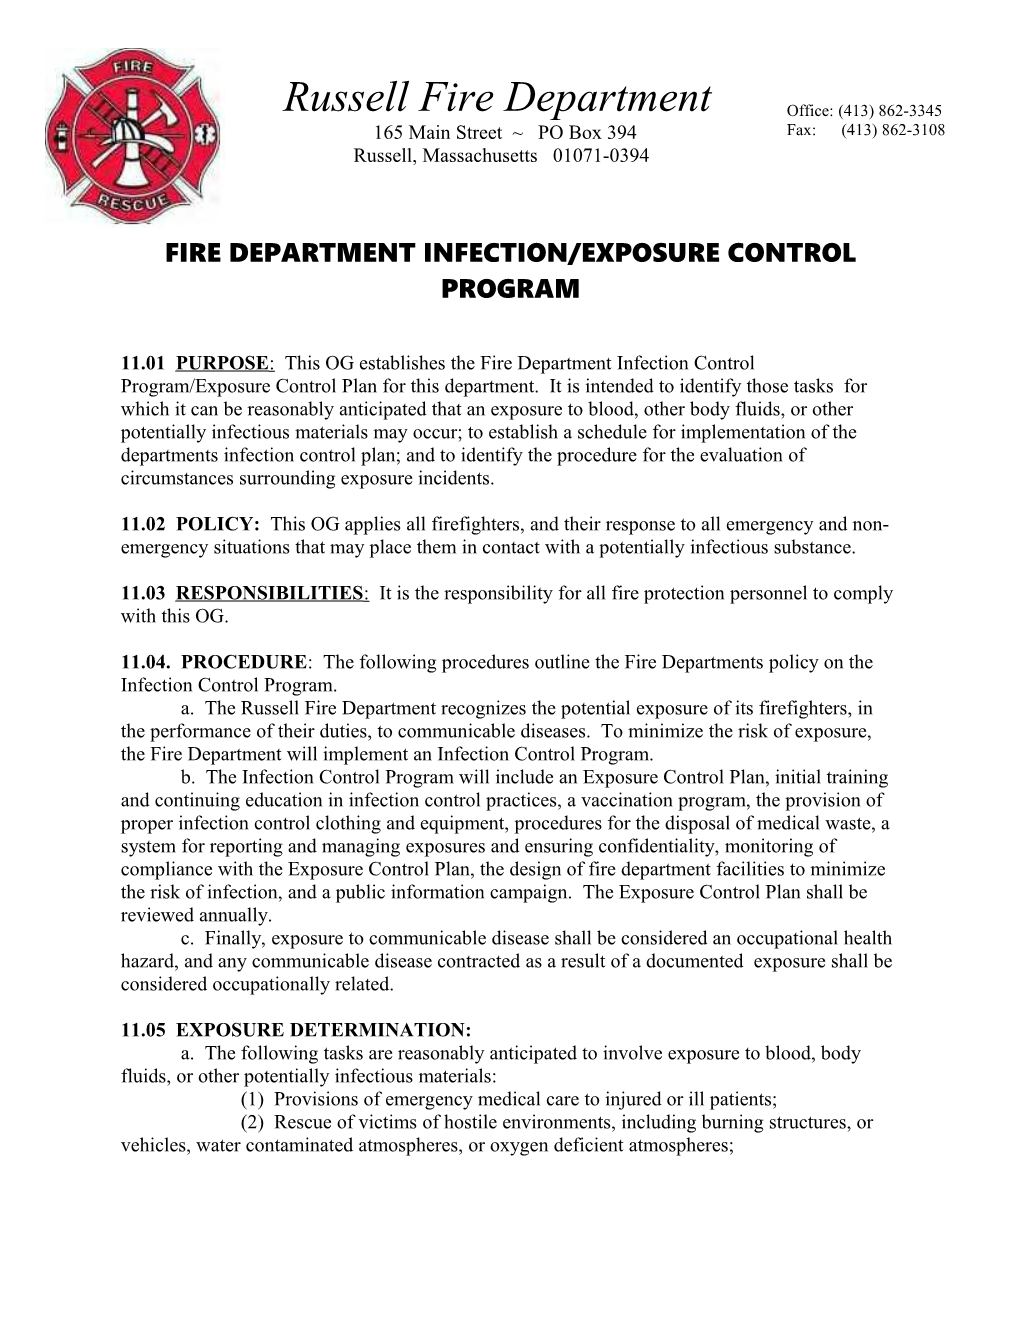 Fire Department Infection/Exposure Control Program